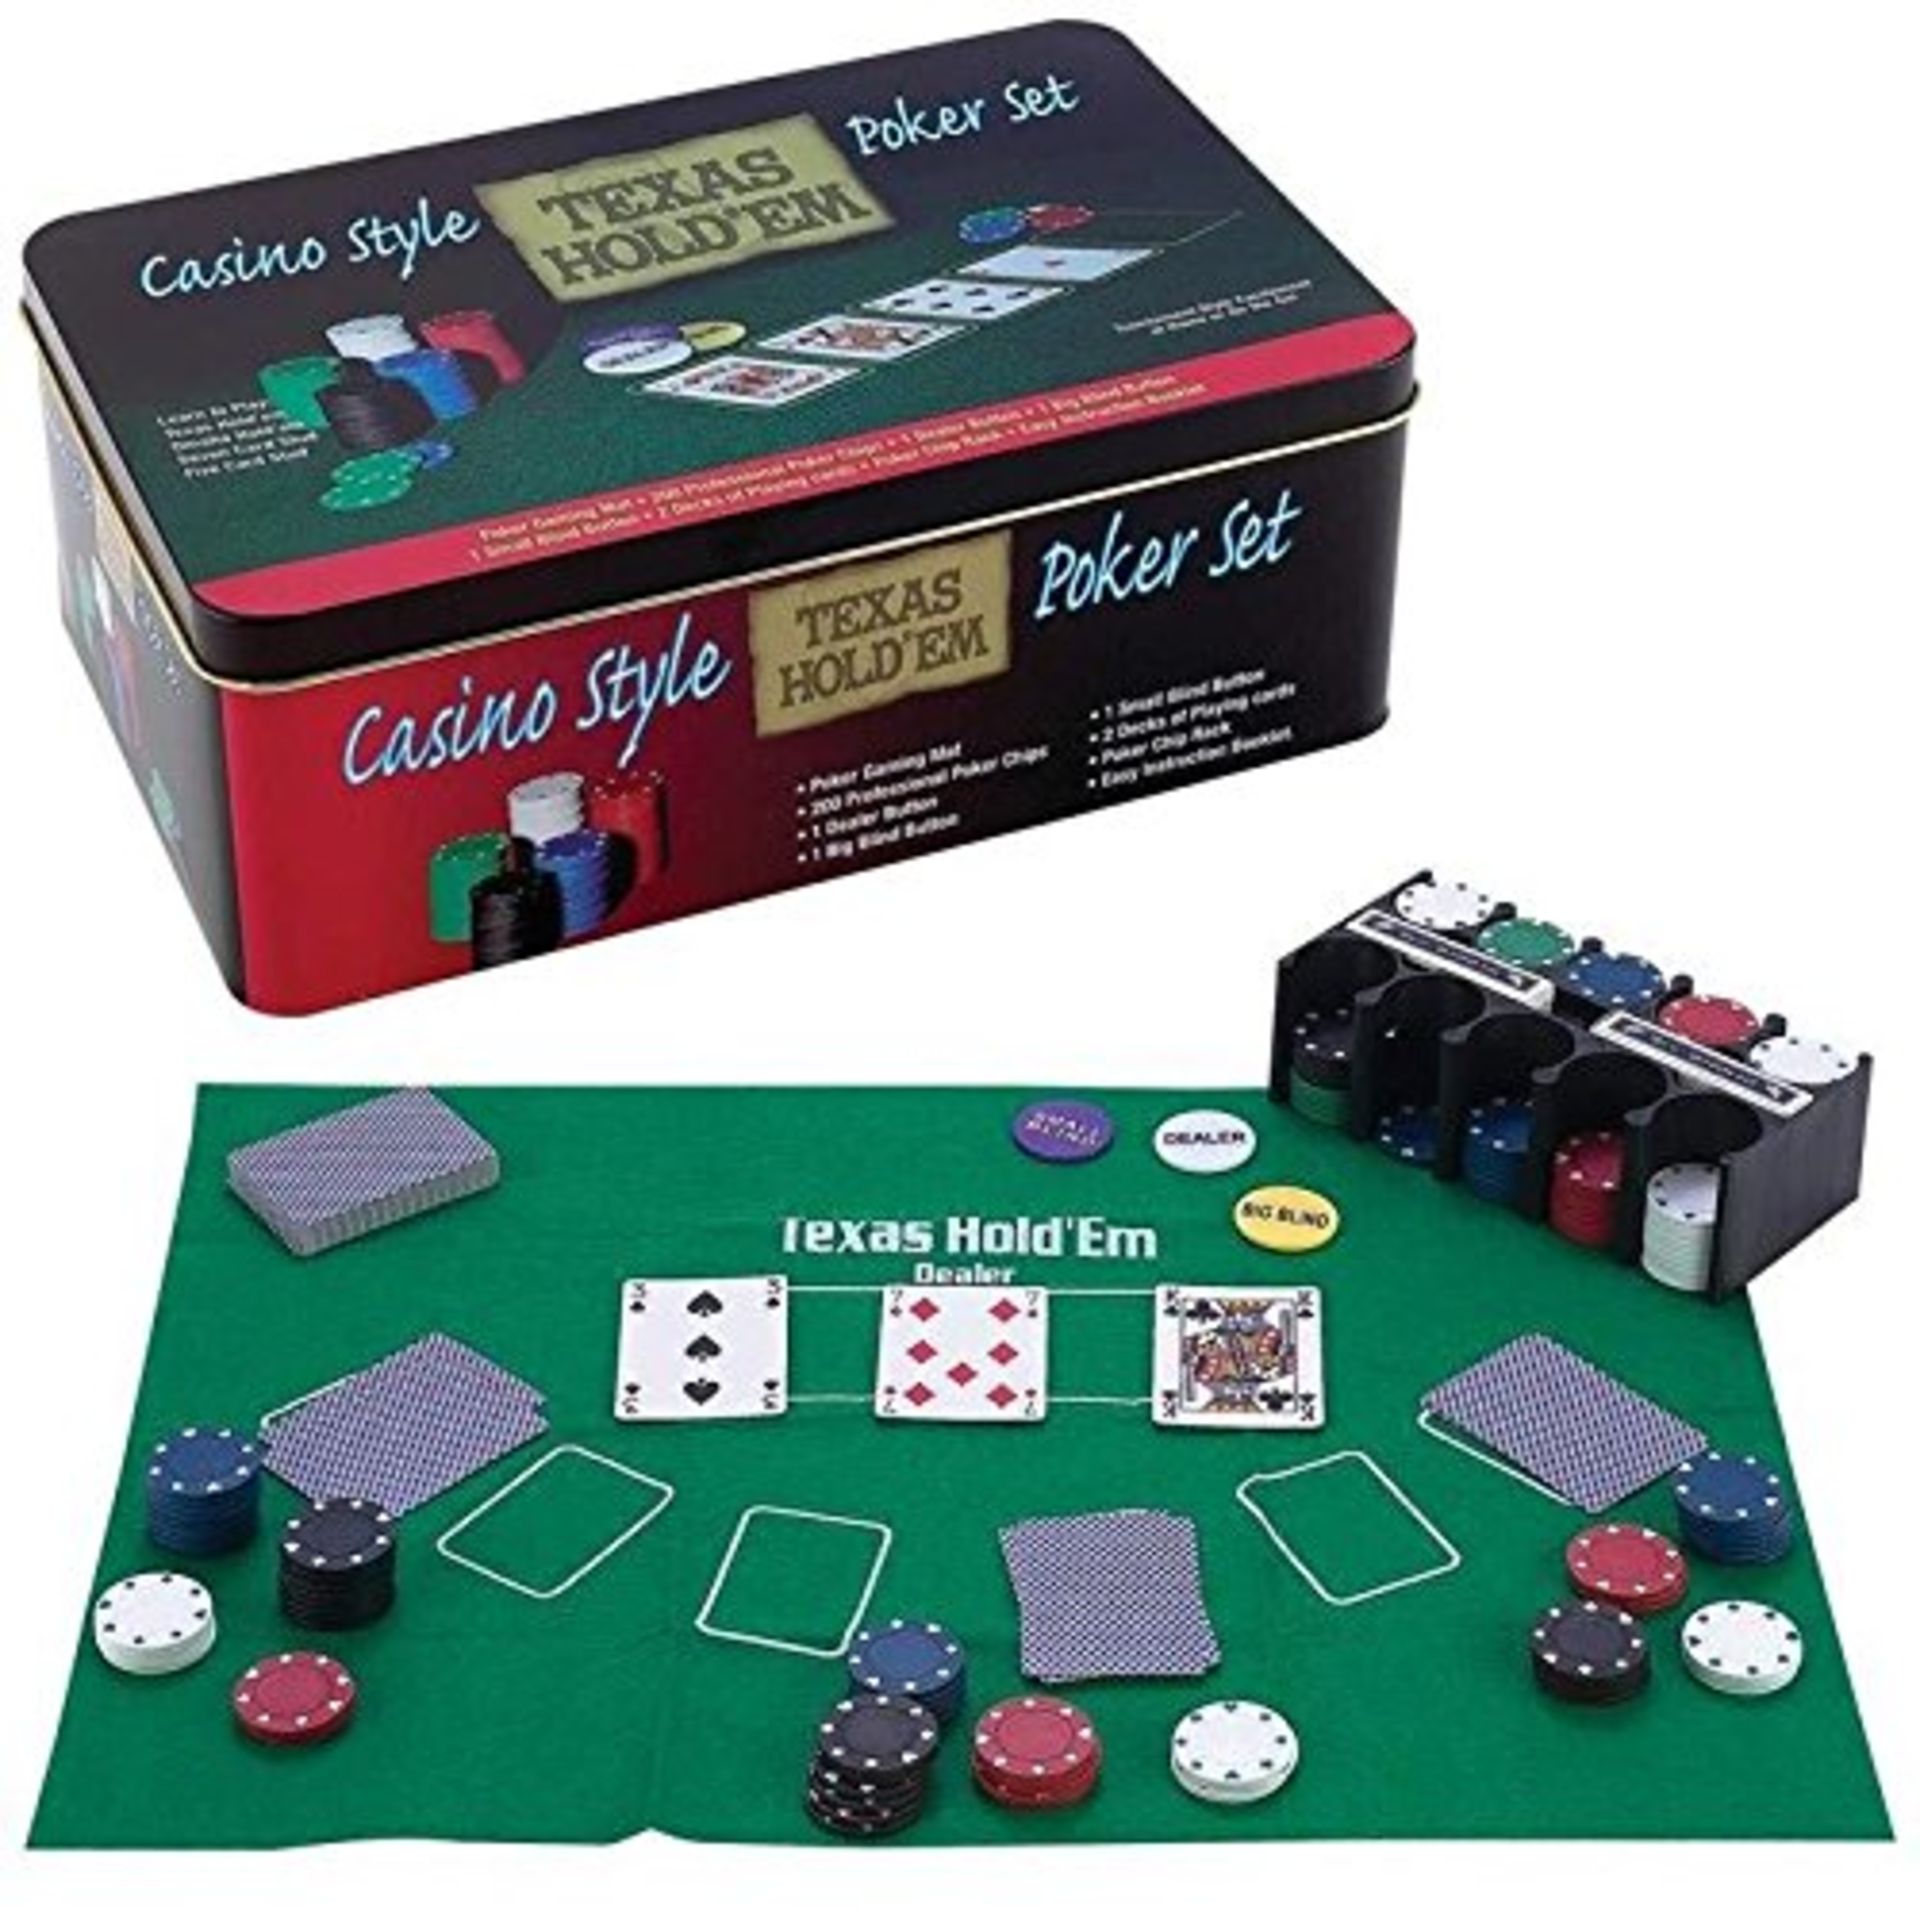 V *TRADE QTY* Brand New Texas Holdem Casino Style Poker Set Including - Poker Gaming Mat - 200 - Image 2 of 2